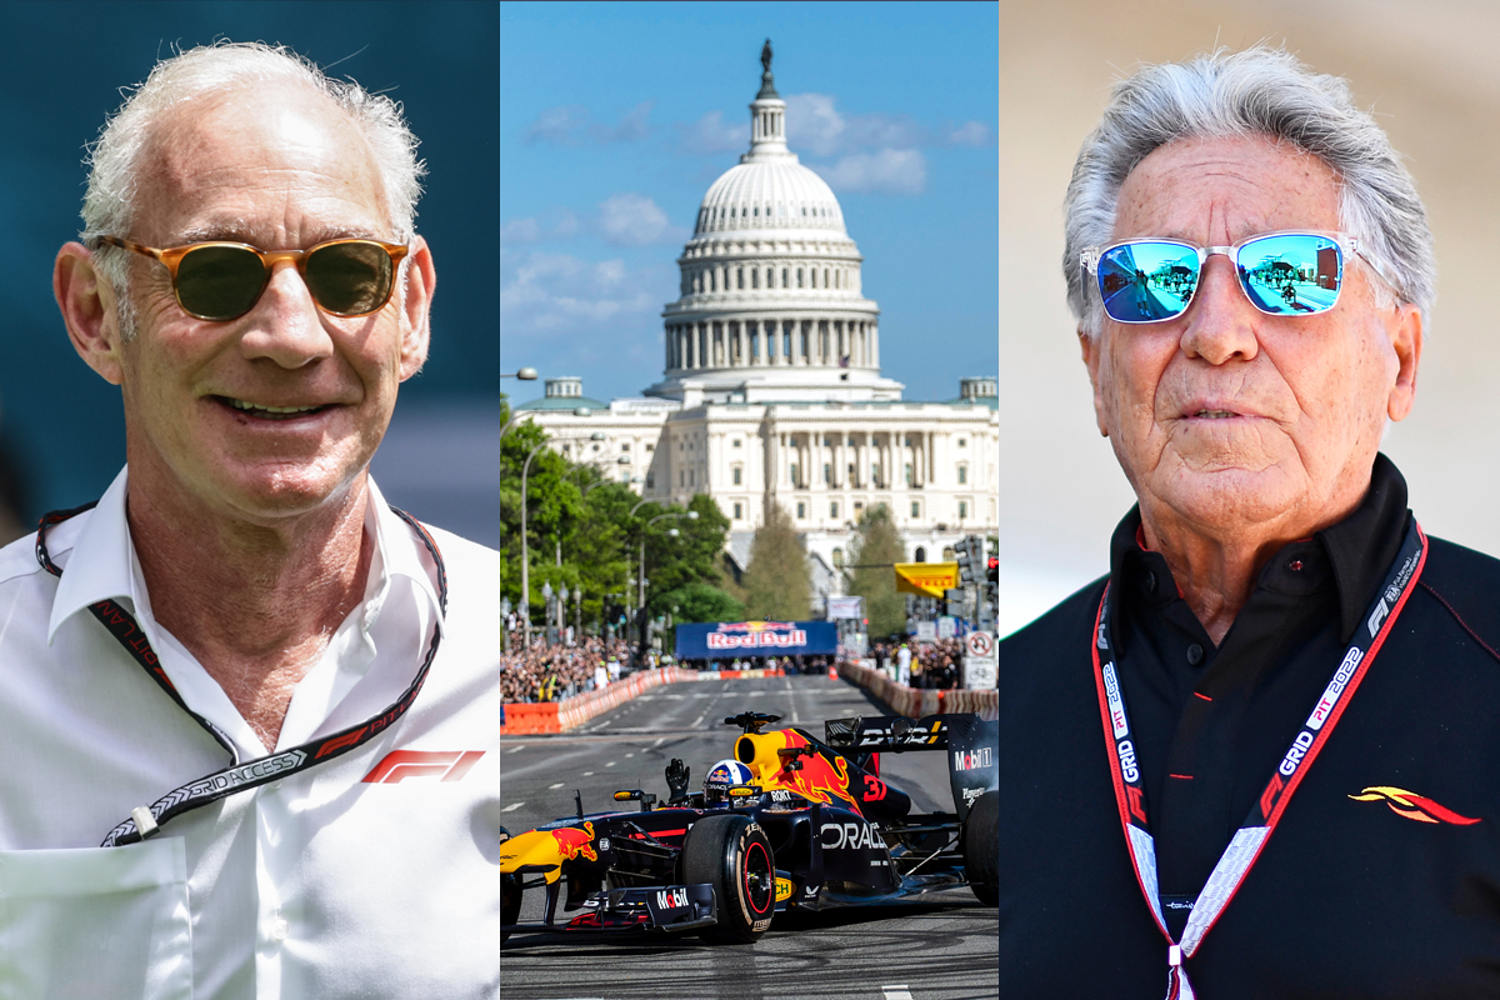 F1 is finally winning U.S. fans, so why won't it admit a new American team? Congress wants answers.